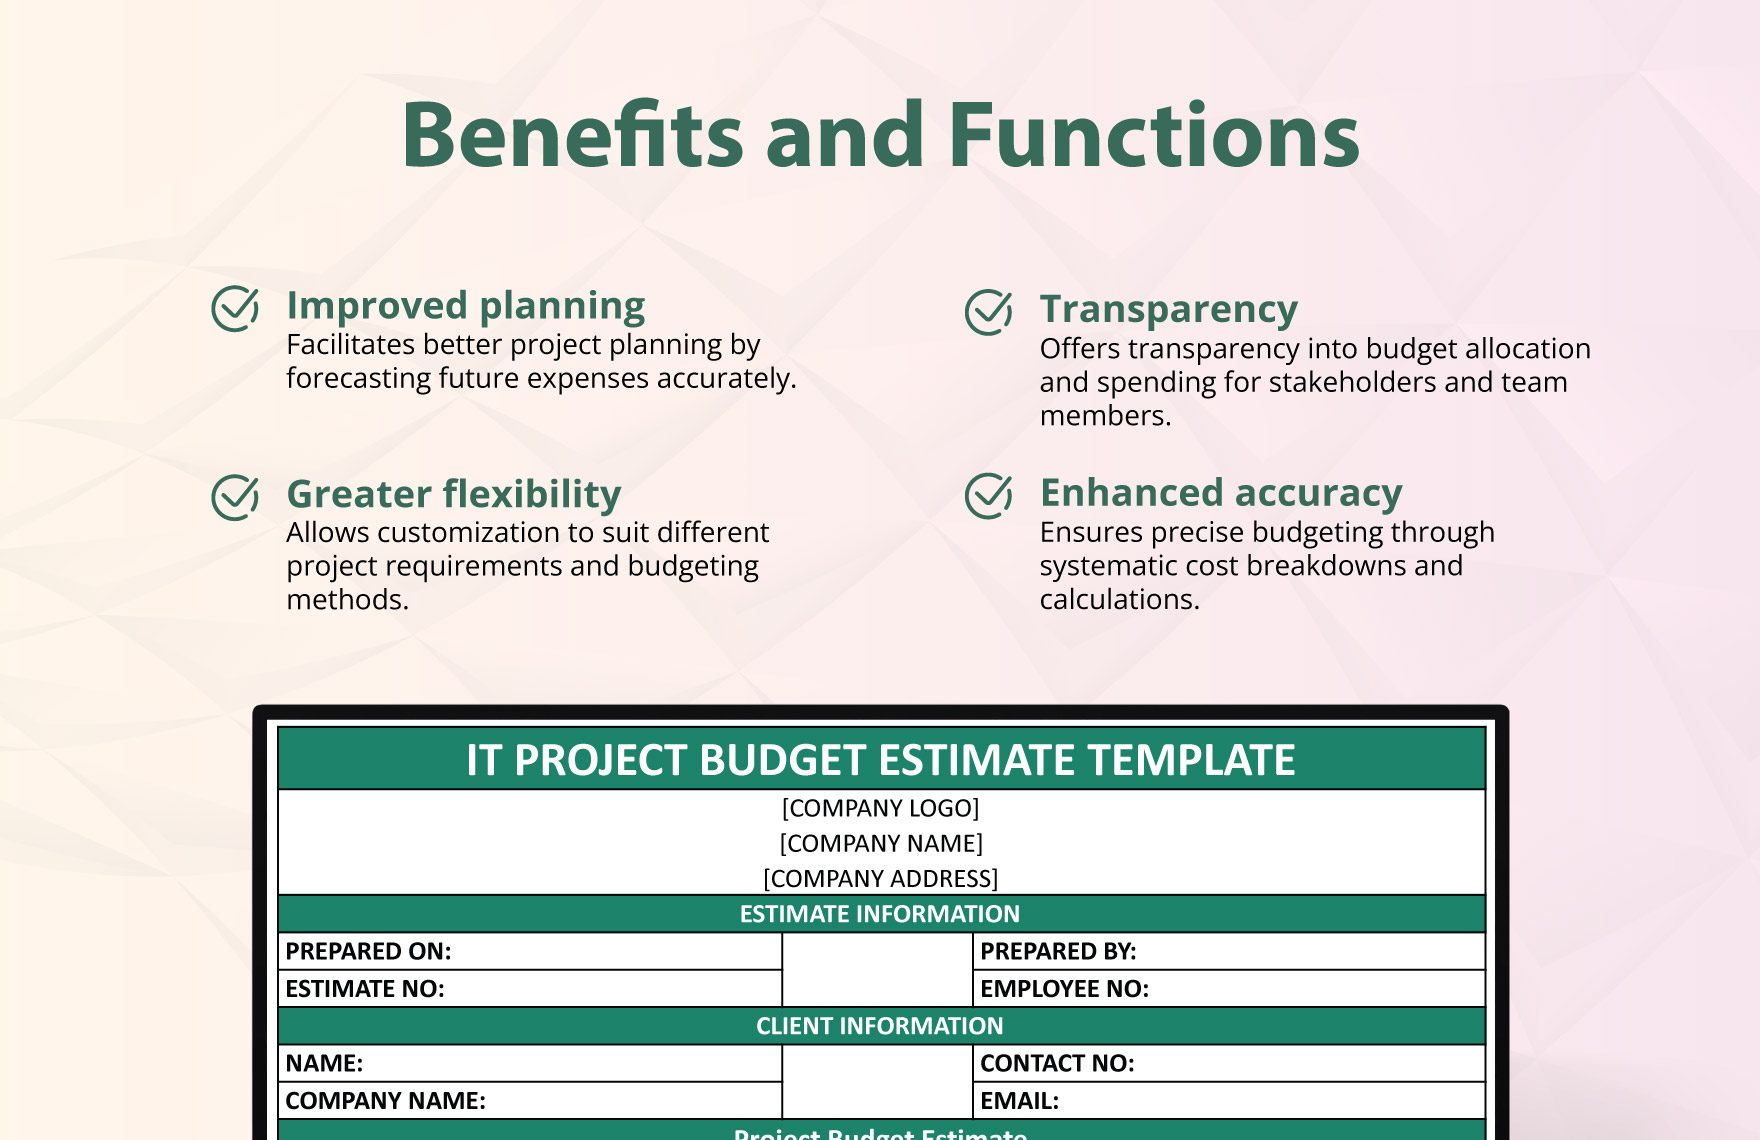 IT Project Budget Estimate Template